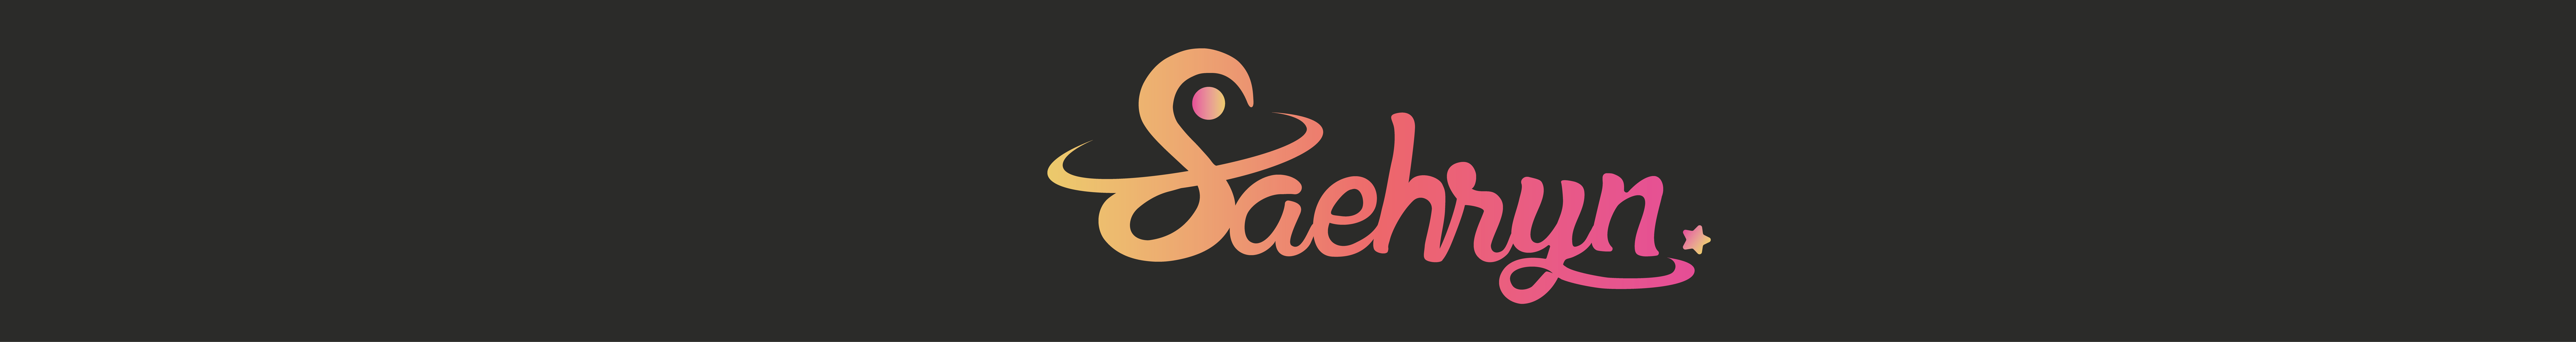 Saehryn 🌙's profile banner